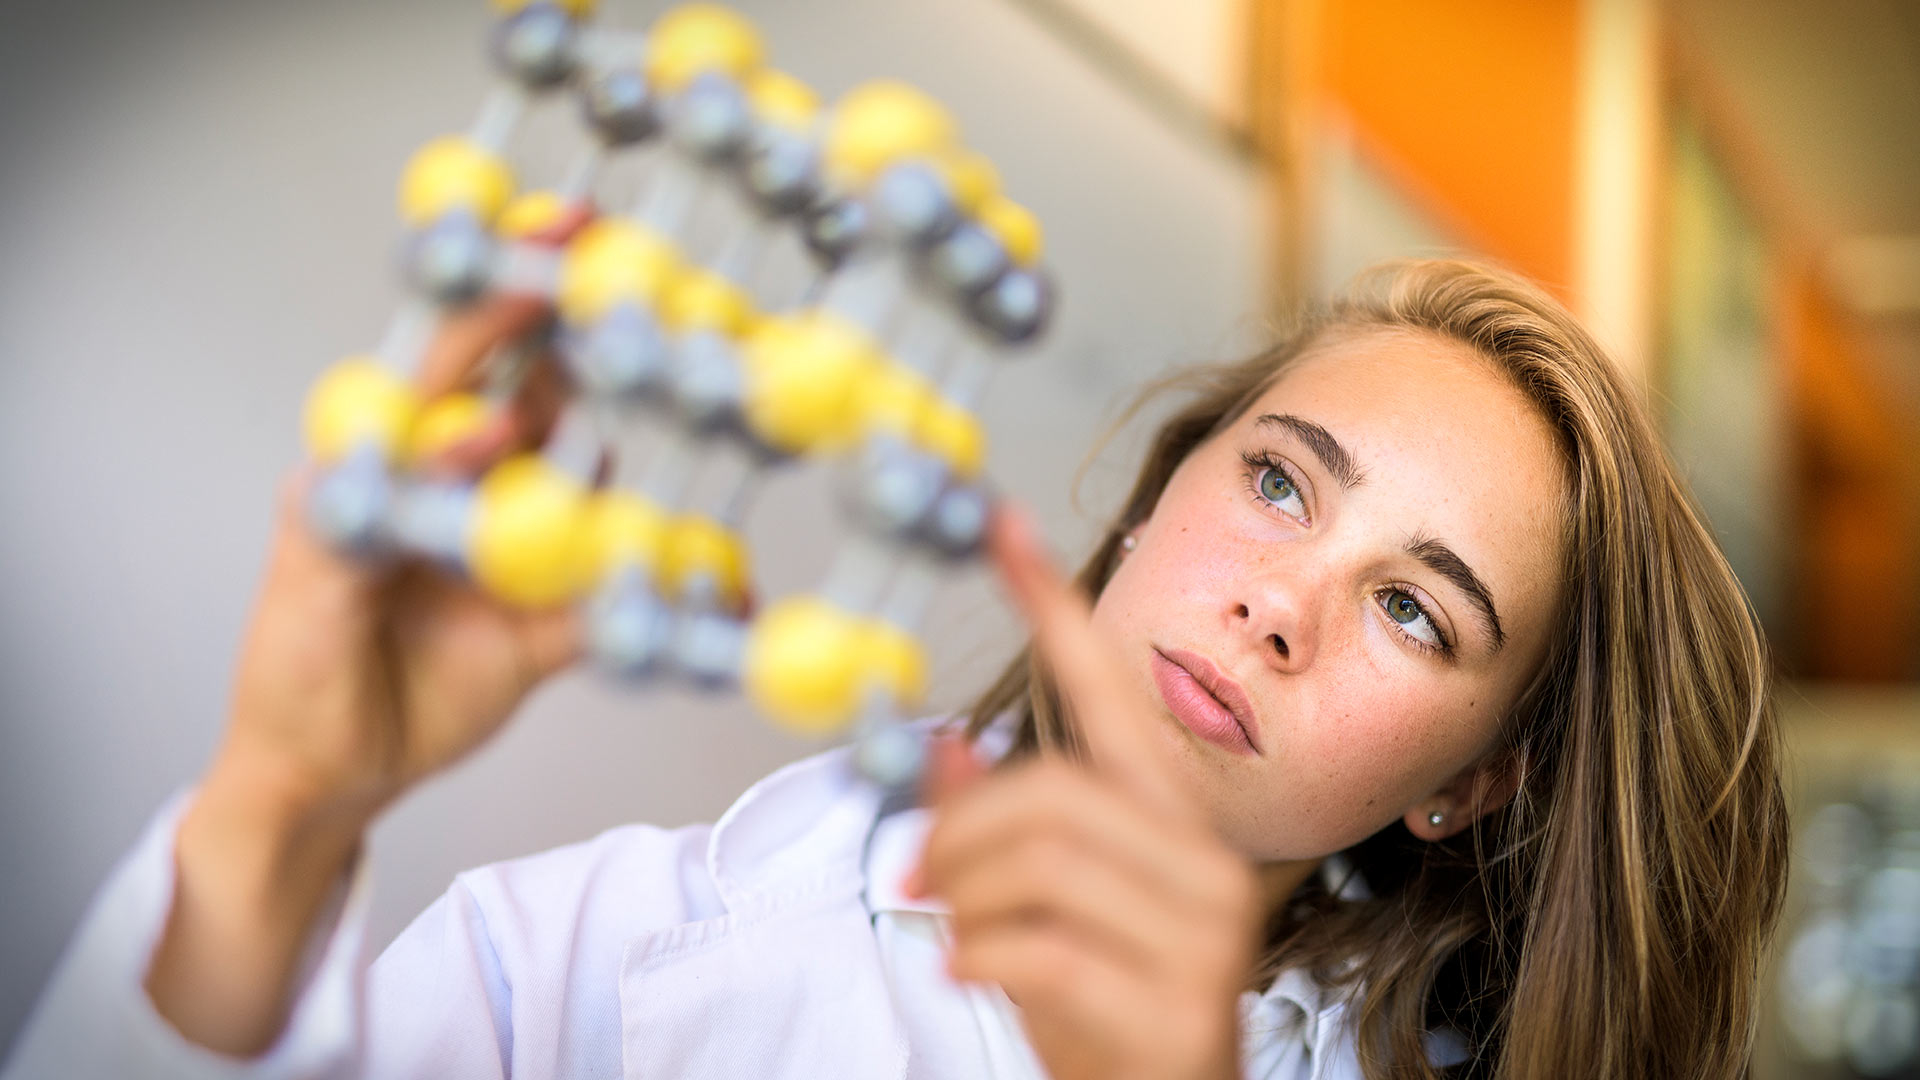 Student examining a molecule model